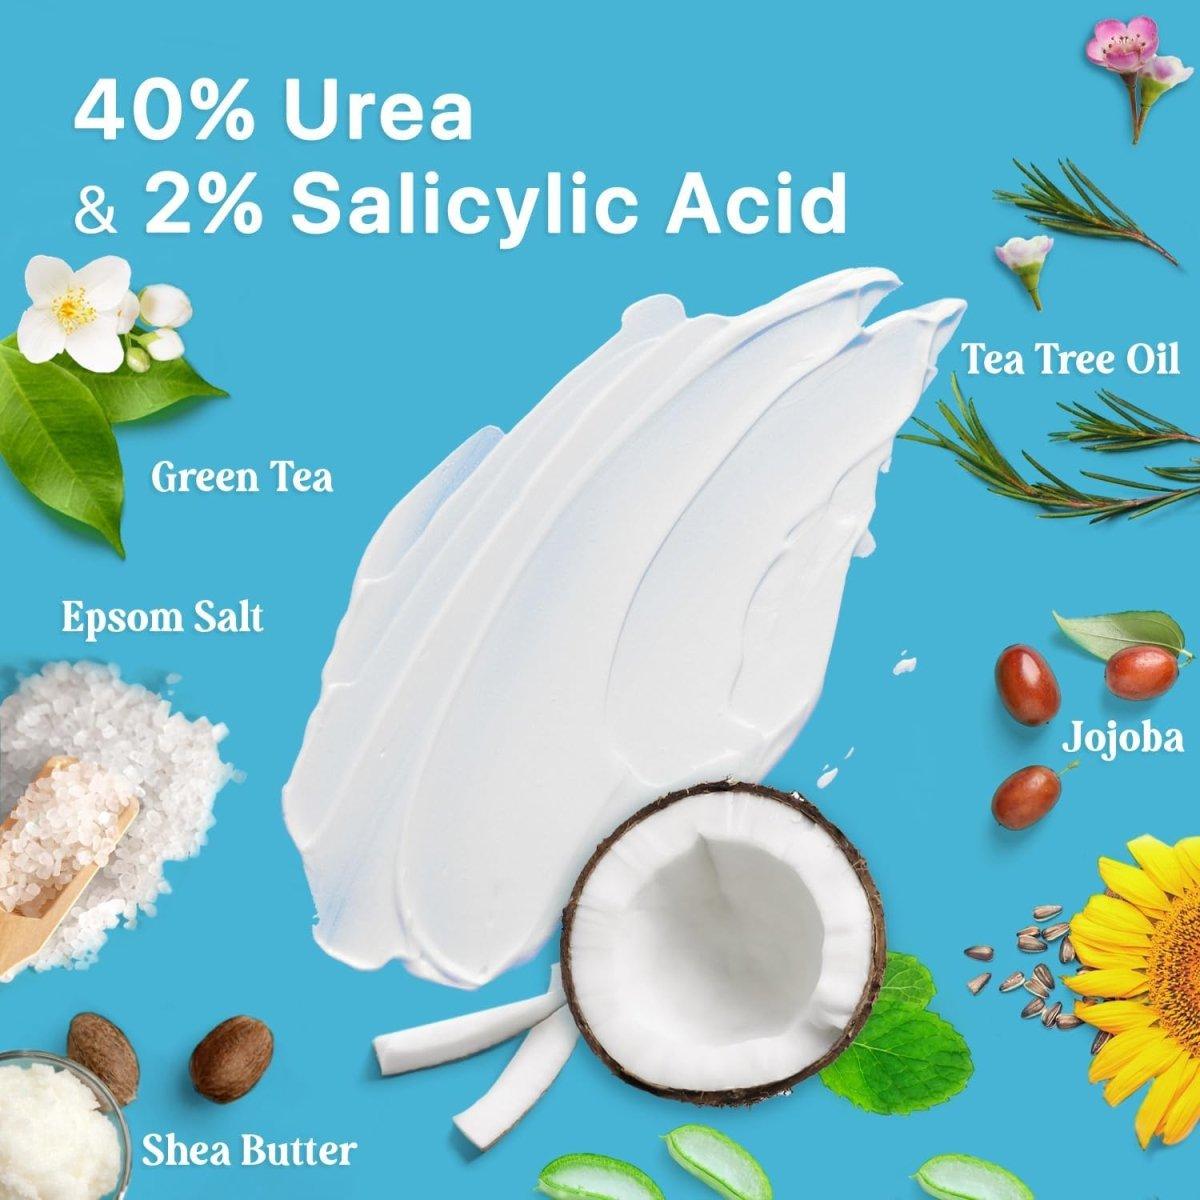 Ebanel Urea Cream 40% - 130g - Glam Global UK